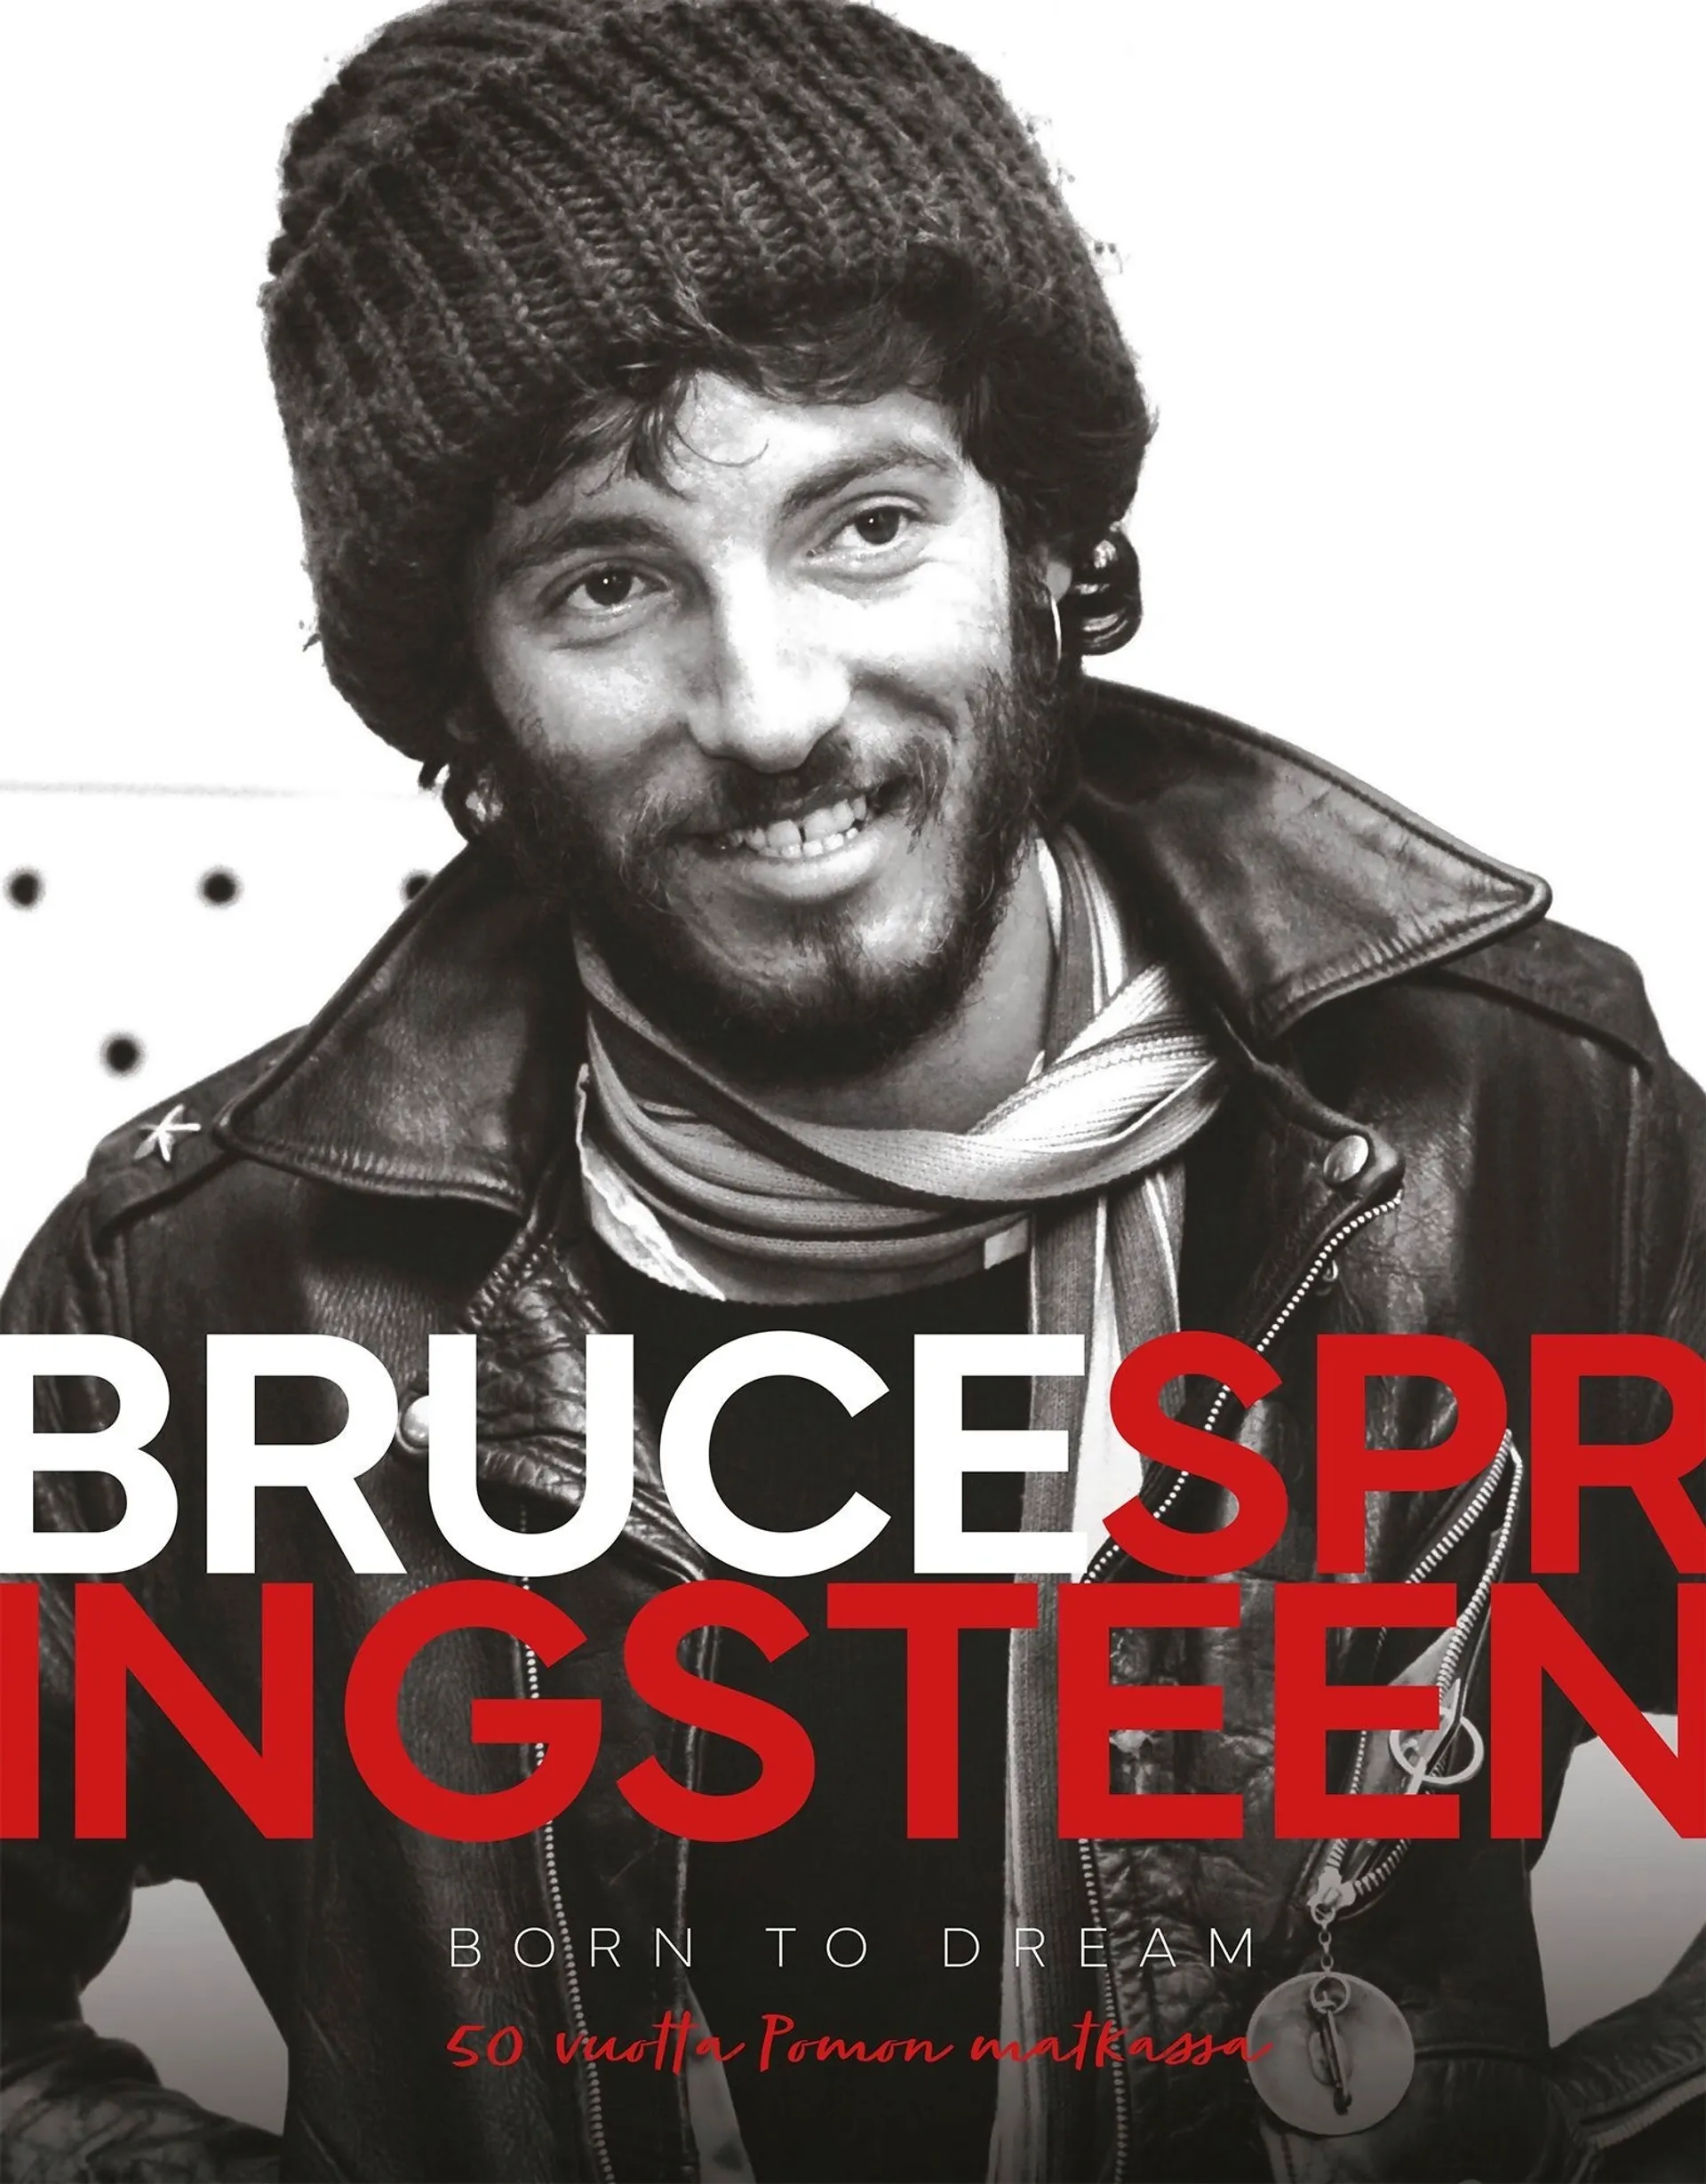 James, Bruce Springsteen - Born to dream - 50 vuotta Pomon matkassa